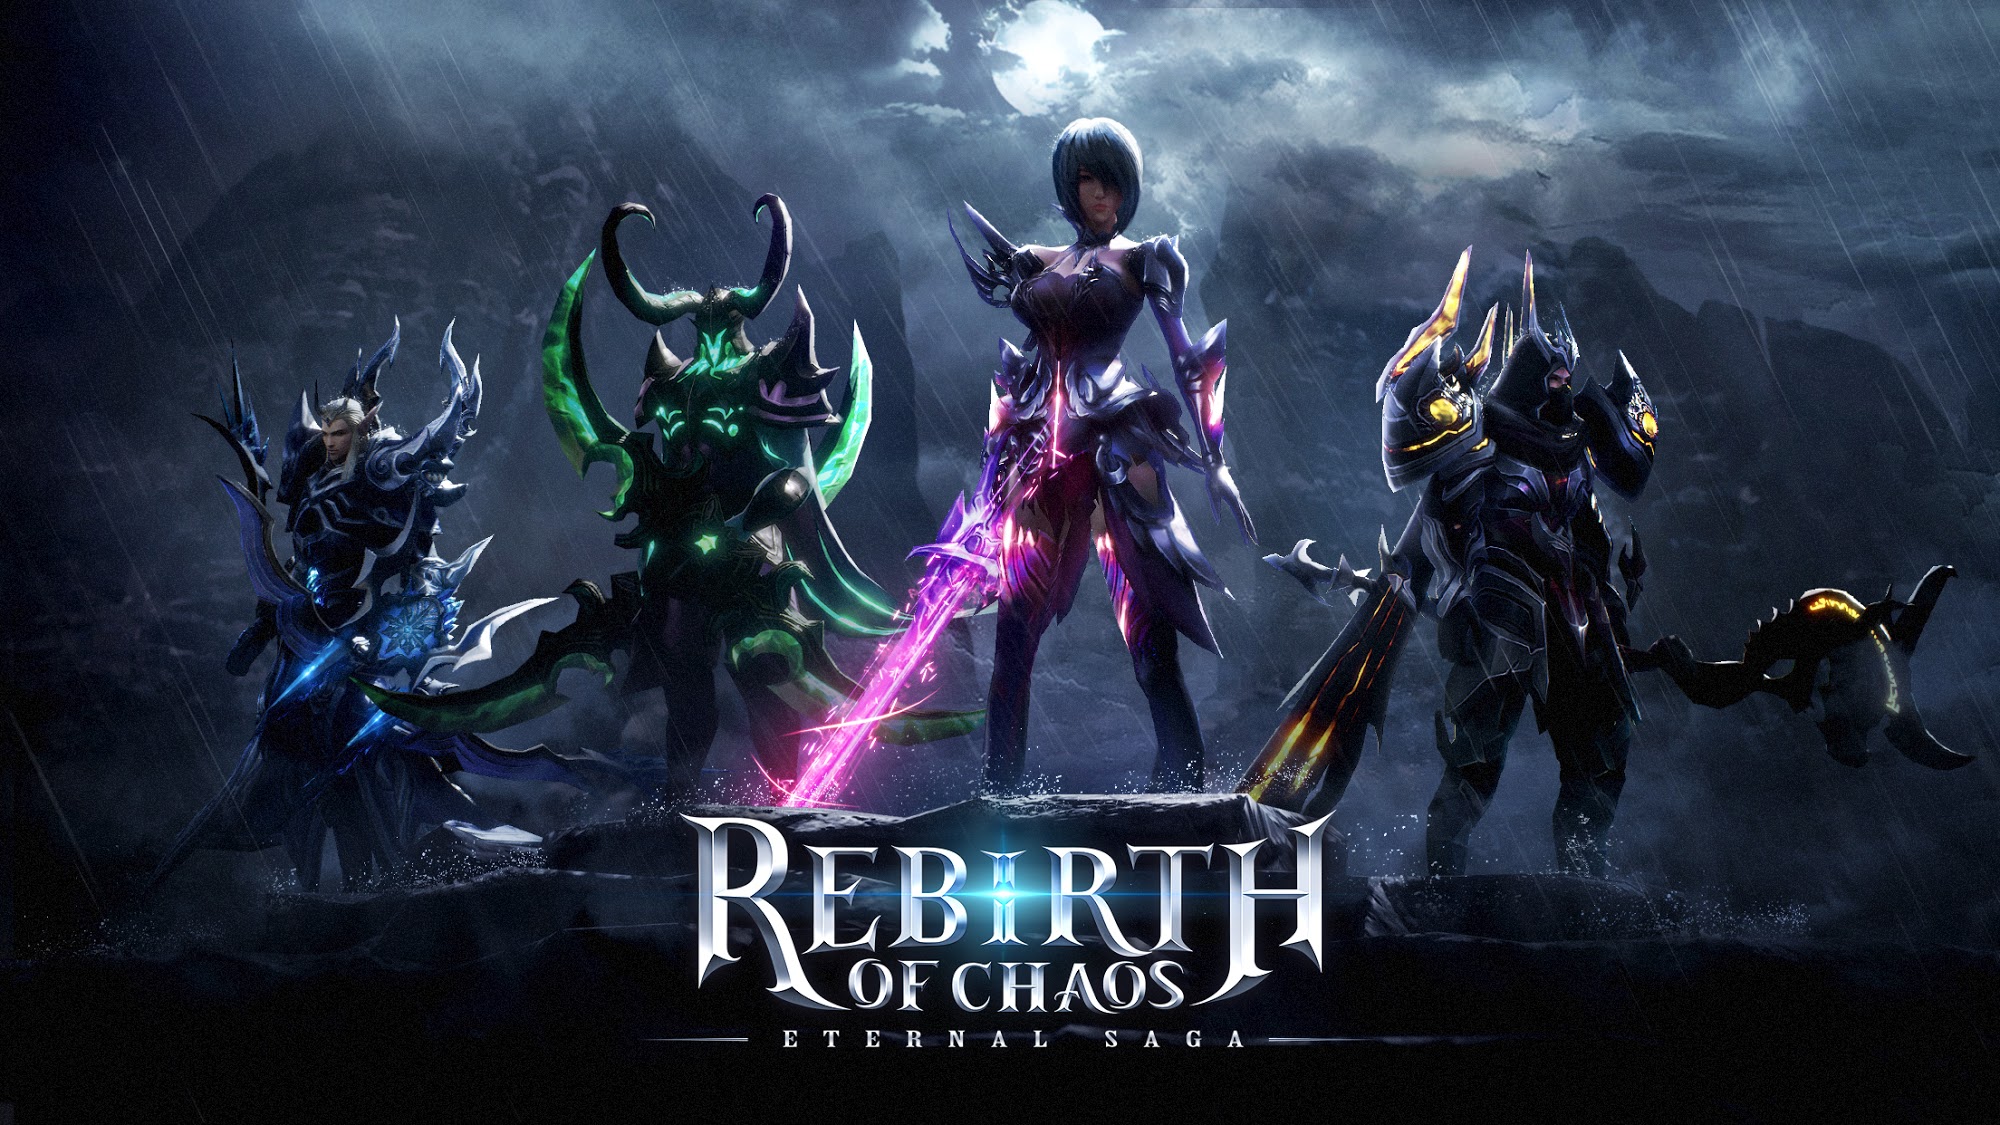 Ladda ner Rebirth of Chaos: Eternal saga på Android A.n.d.r.o.i.d. .5...0. .a.n.d. .m.o.r.e gratis.